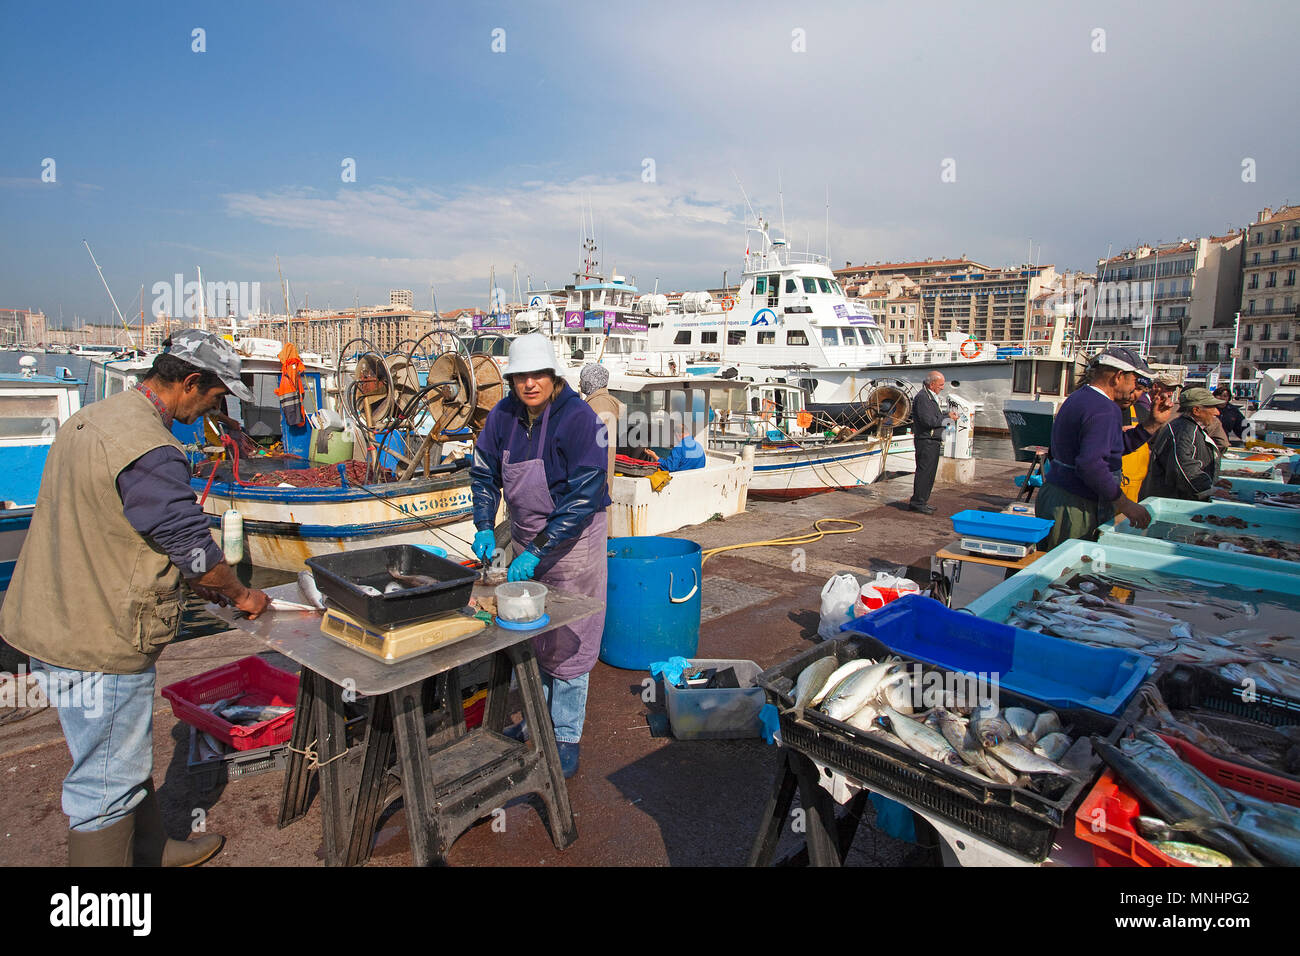 Fishermen selling fish at harbour Vieux Port, Marseille, Bouches-du-Rhone, Provence-Alpes-Côte d’Azur, South France, France, Europe Stock Photo